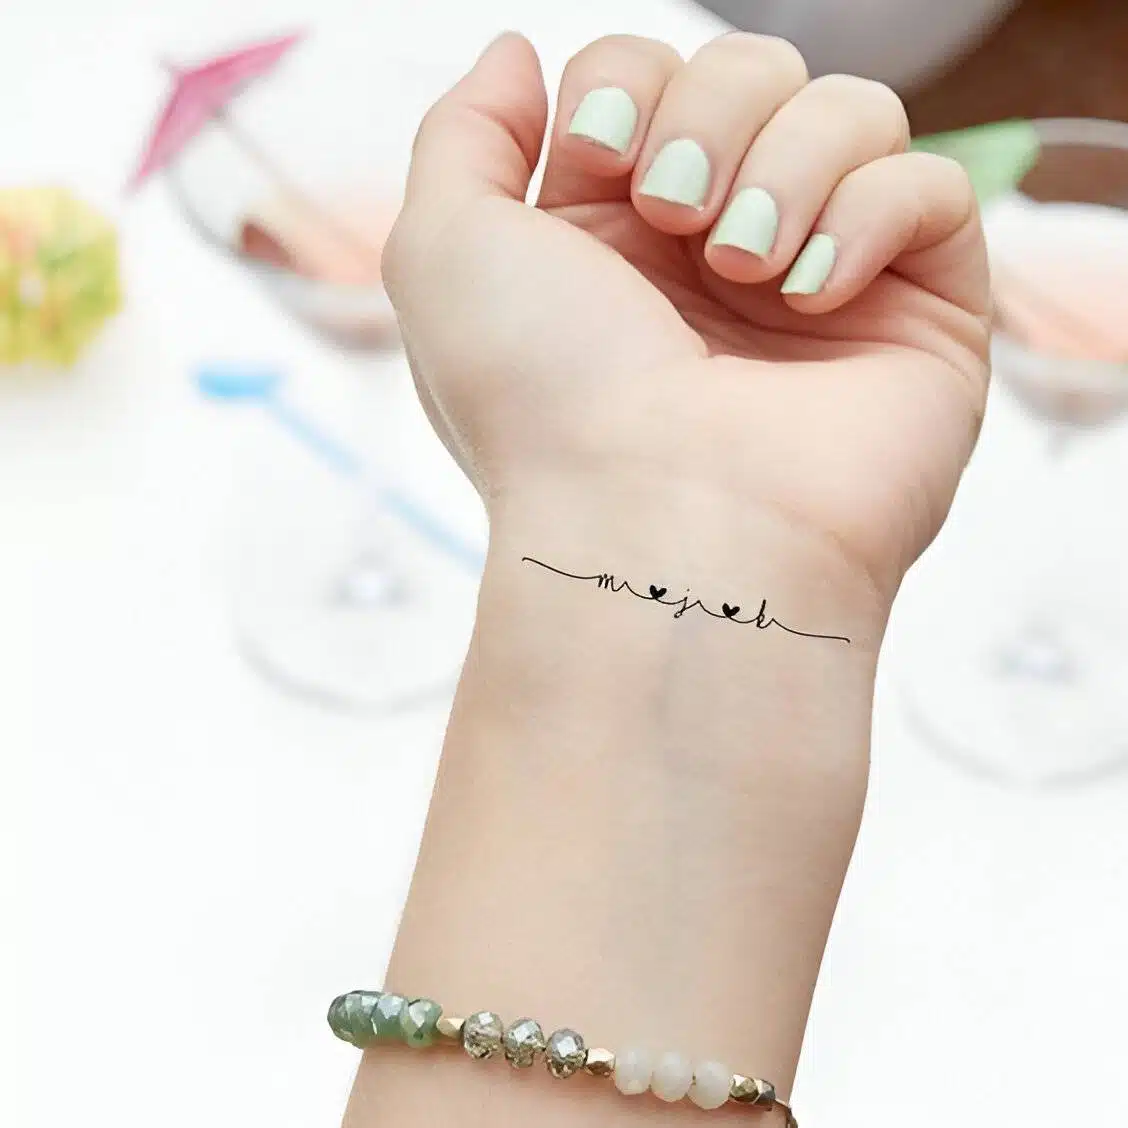 25 Simple Yet Elegant Tiny Tattoos For Women - 211